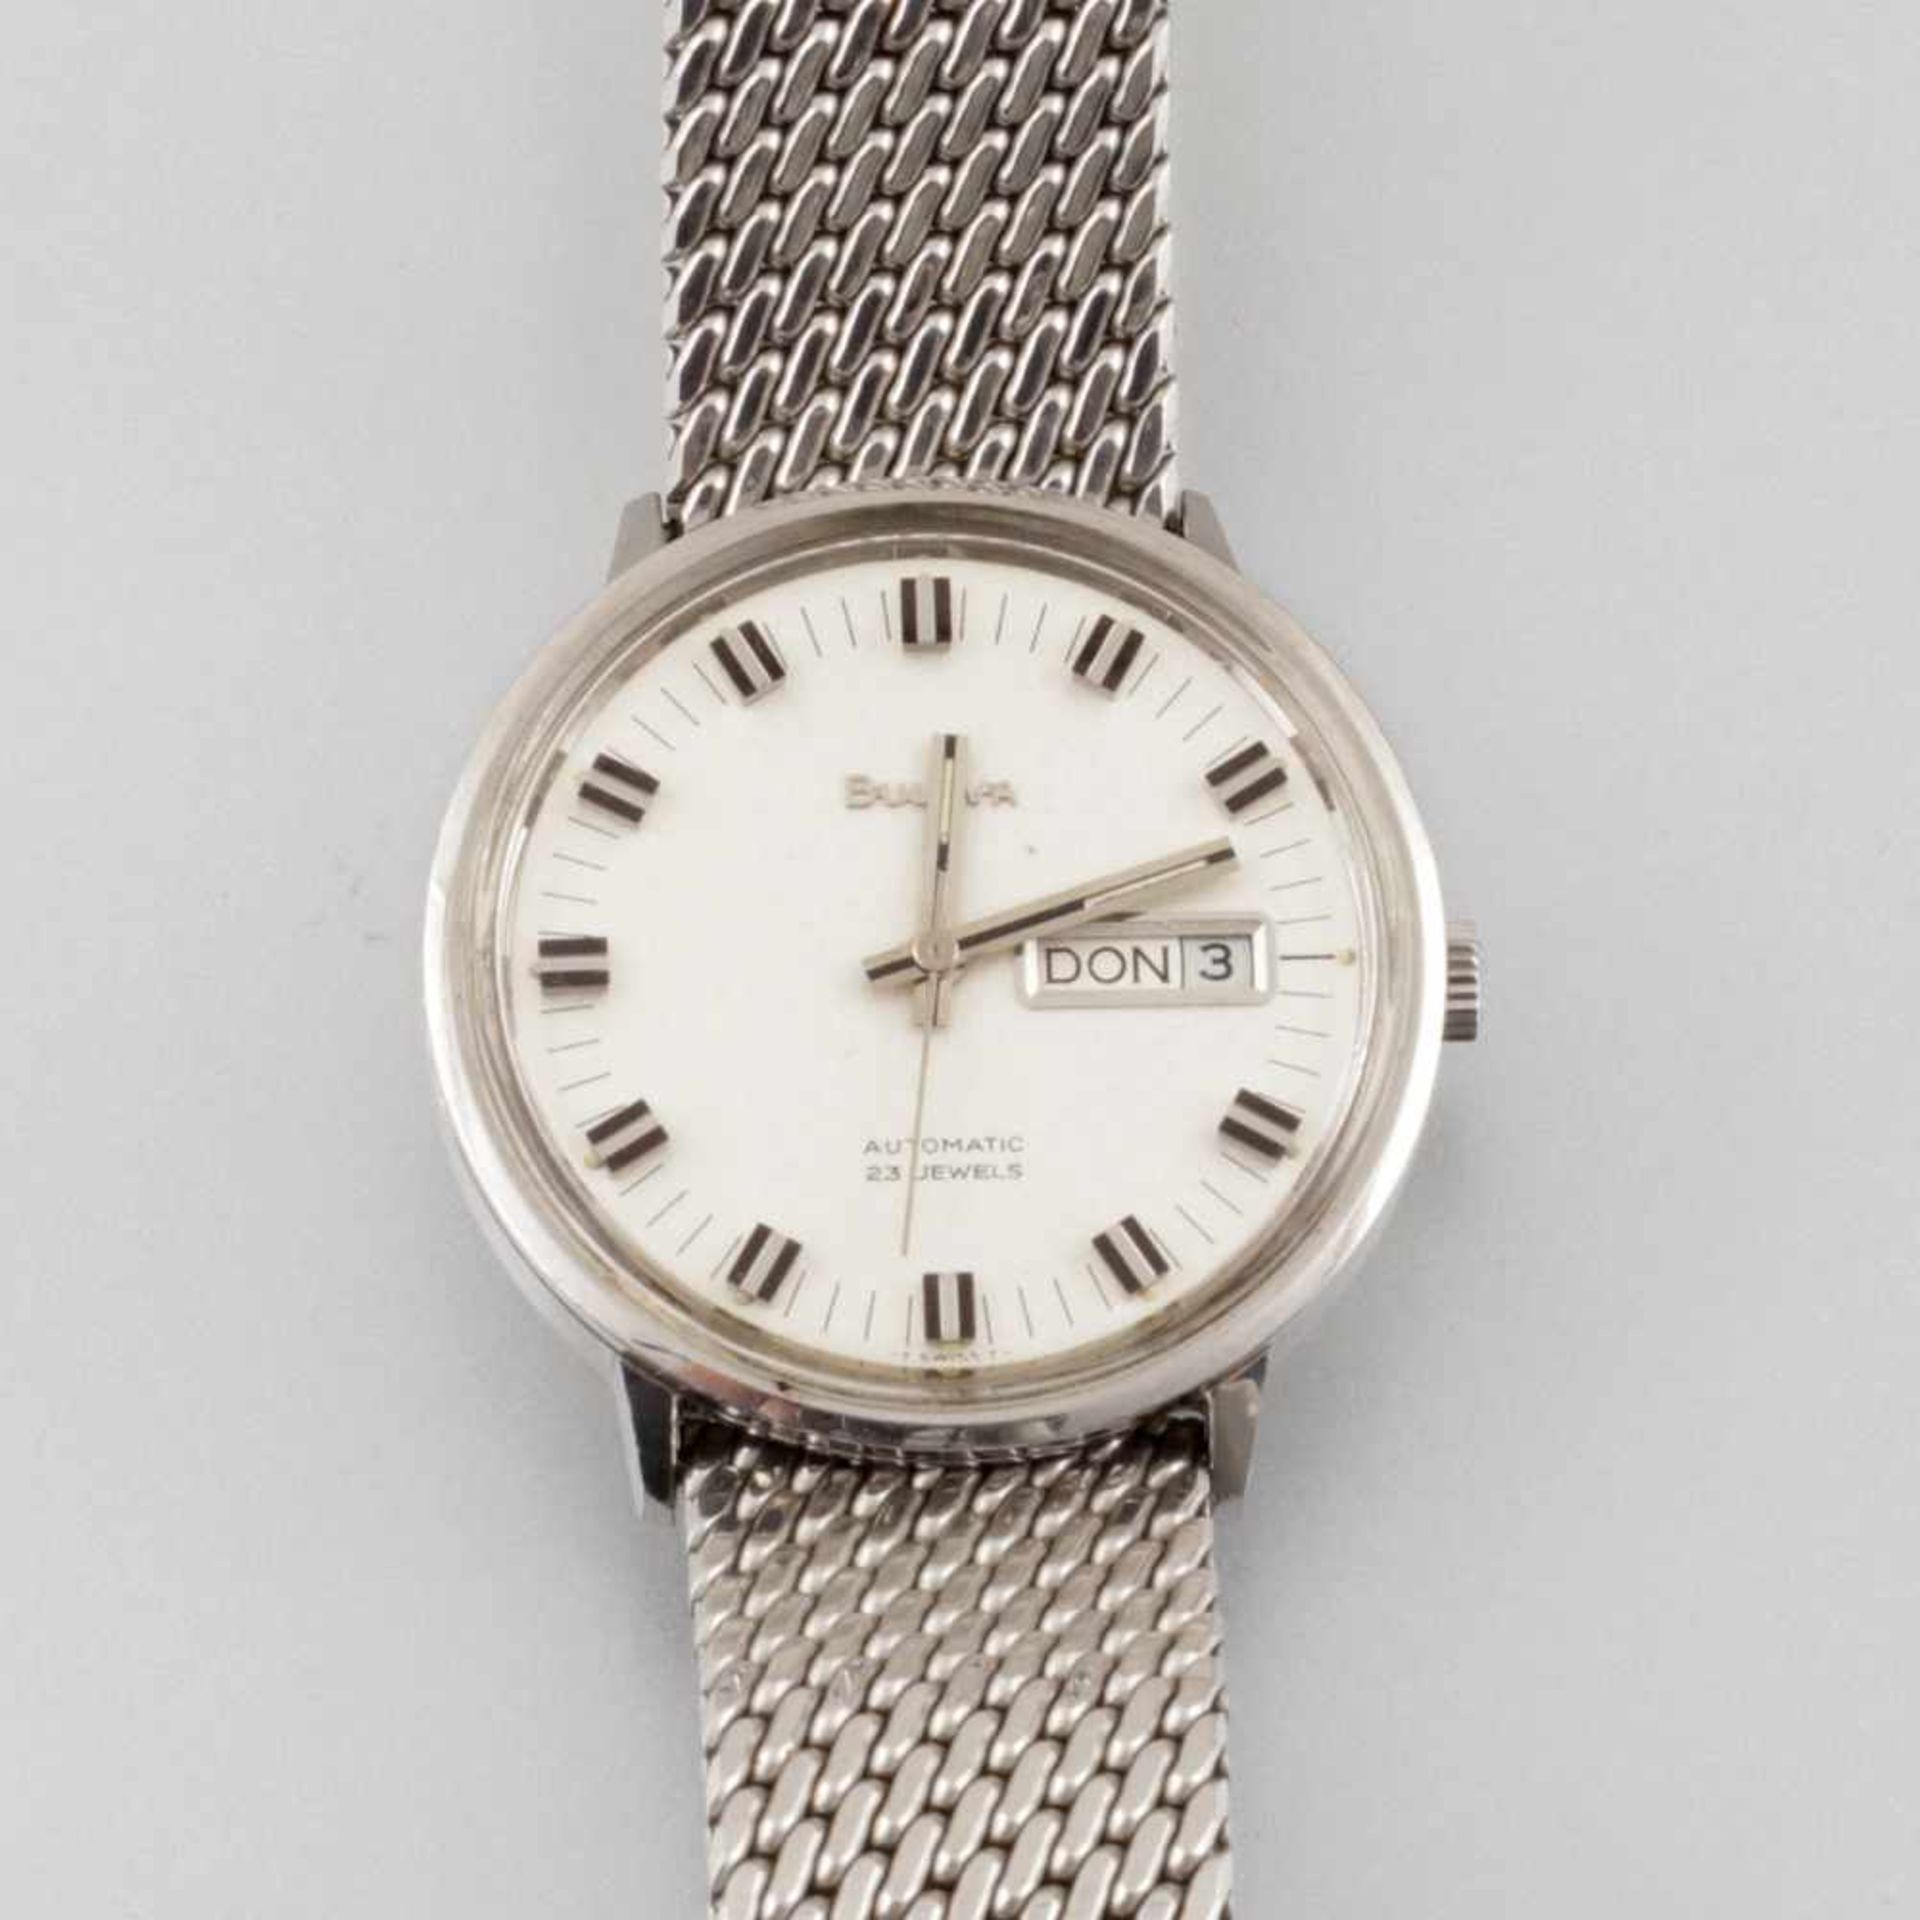 Bulova-HerrenarmbanduhrFa. Bulova Watch Co. Inc. Vintage mit Datum. Edelstahl. Auf dem Zifferblatt